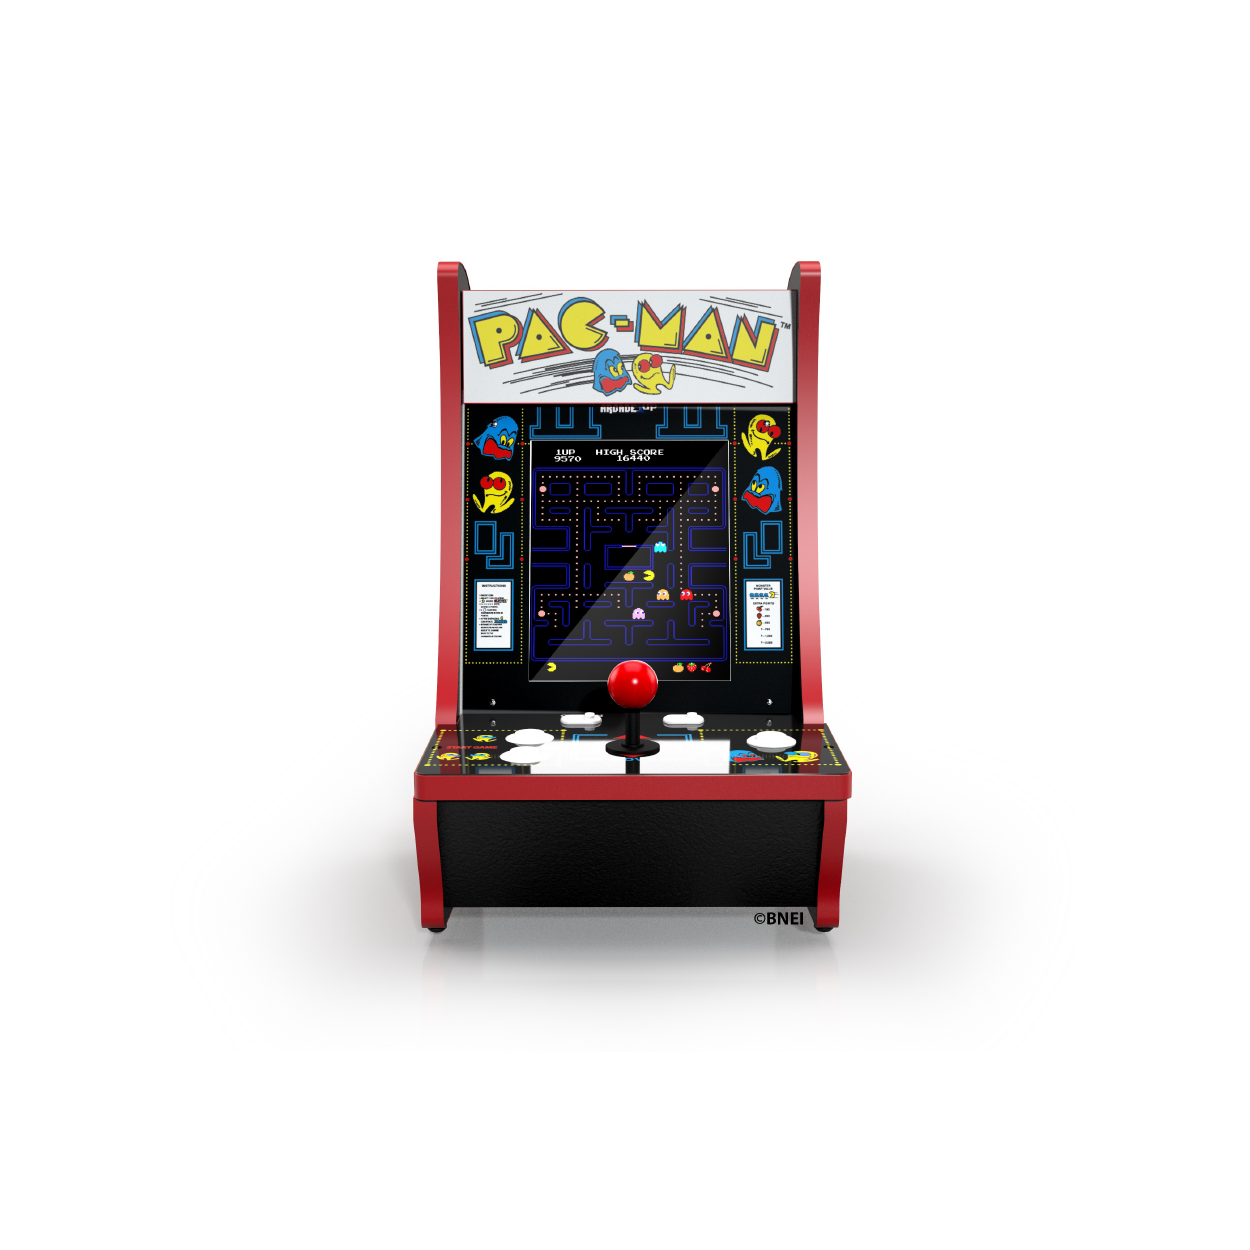 Pac-man counter arcade machine